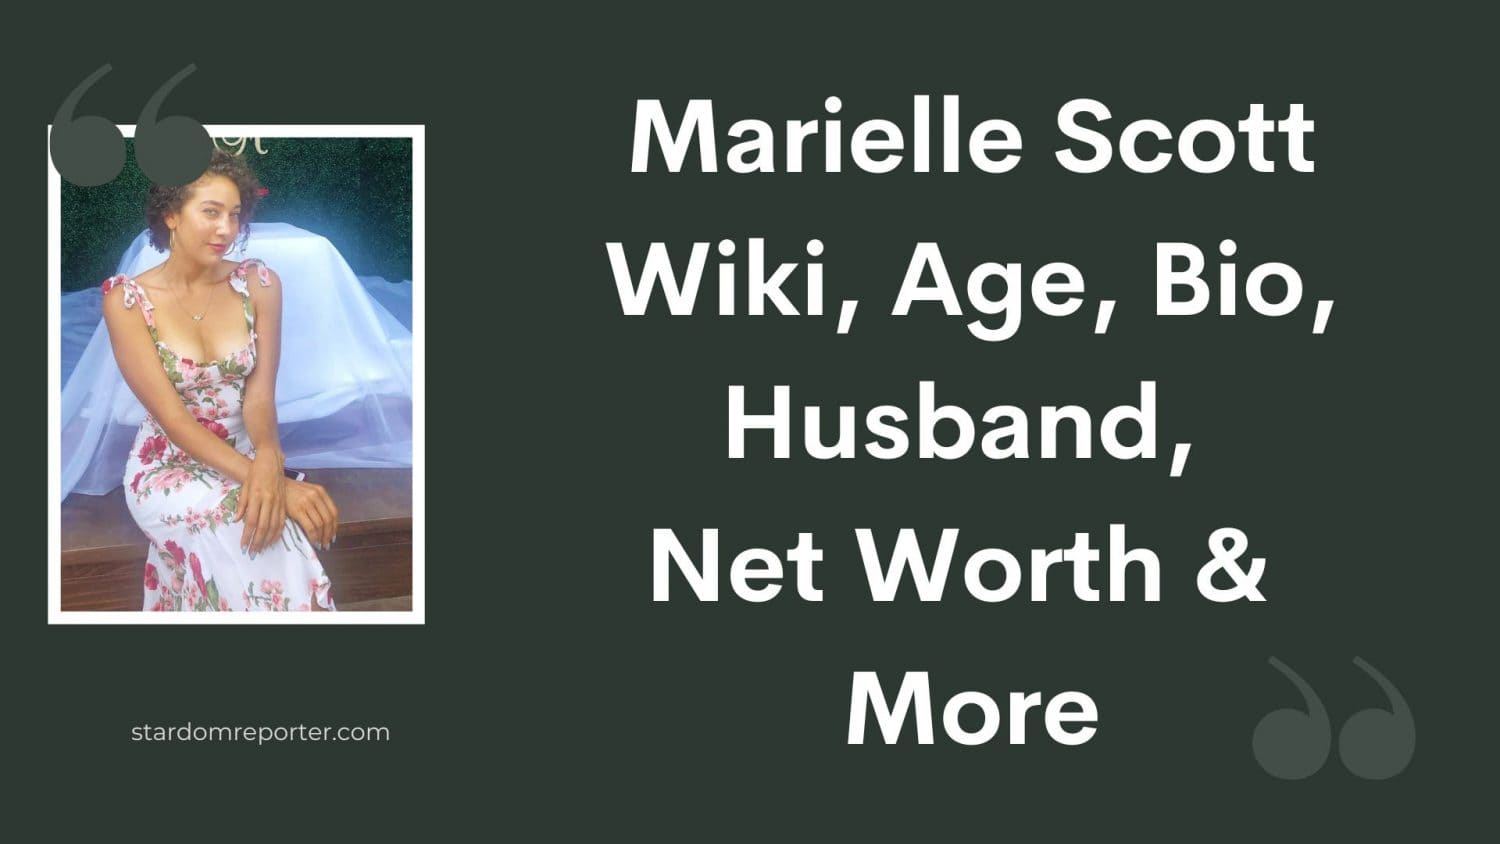 Marielle Scott Wiki, Age, Bio, Husband, Net Worth & More - 19